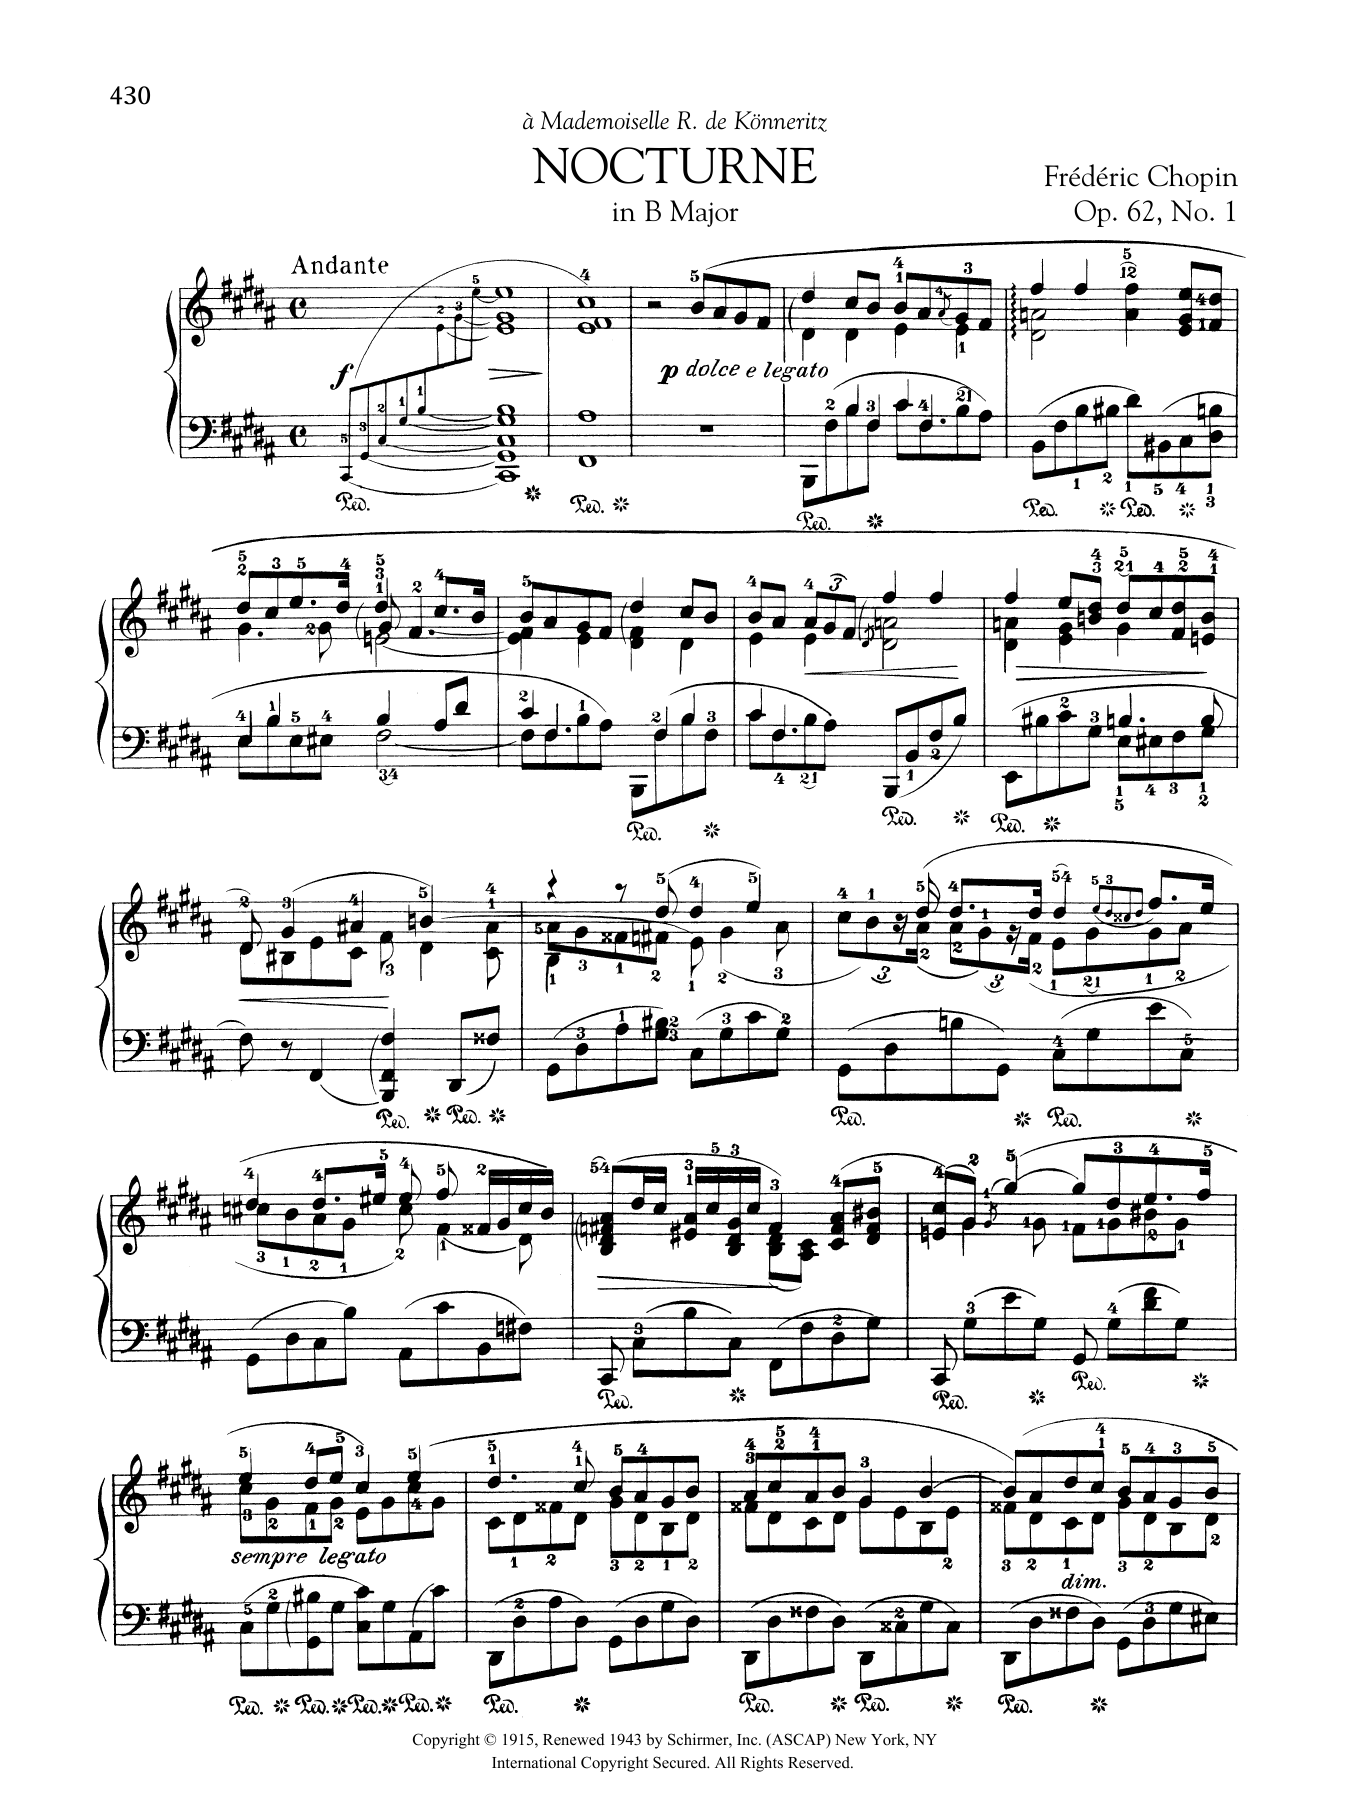 Nocturne in B Major, Op. 62, No. 1 sheet music